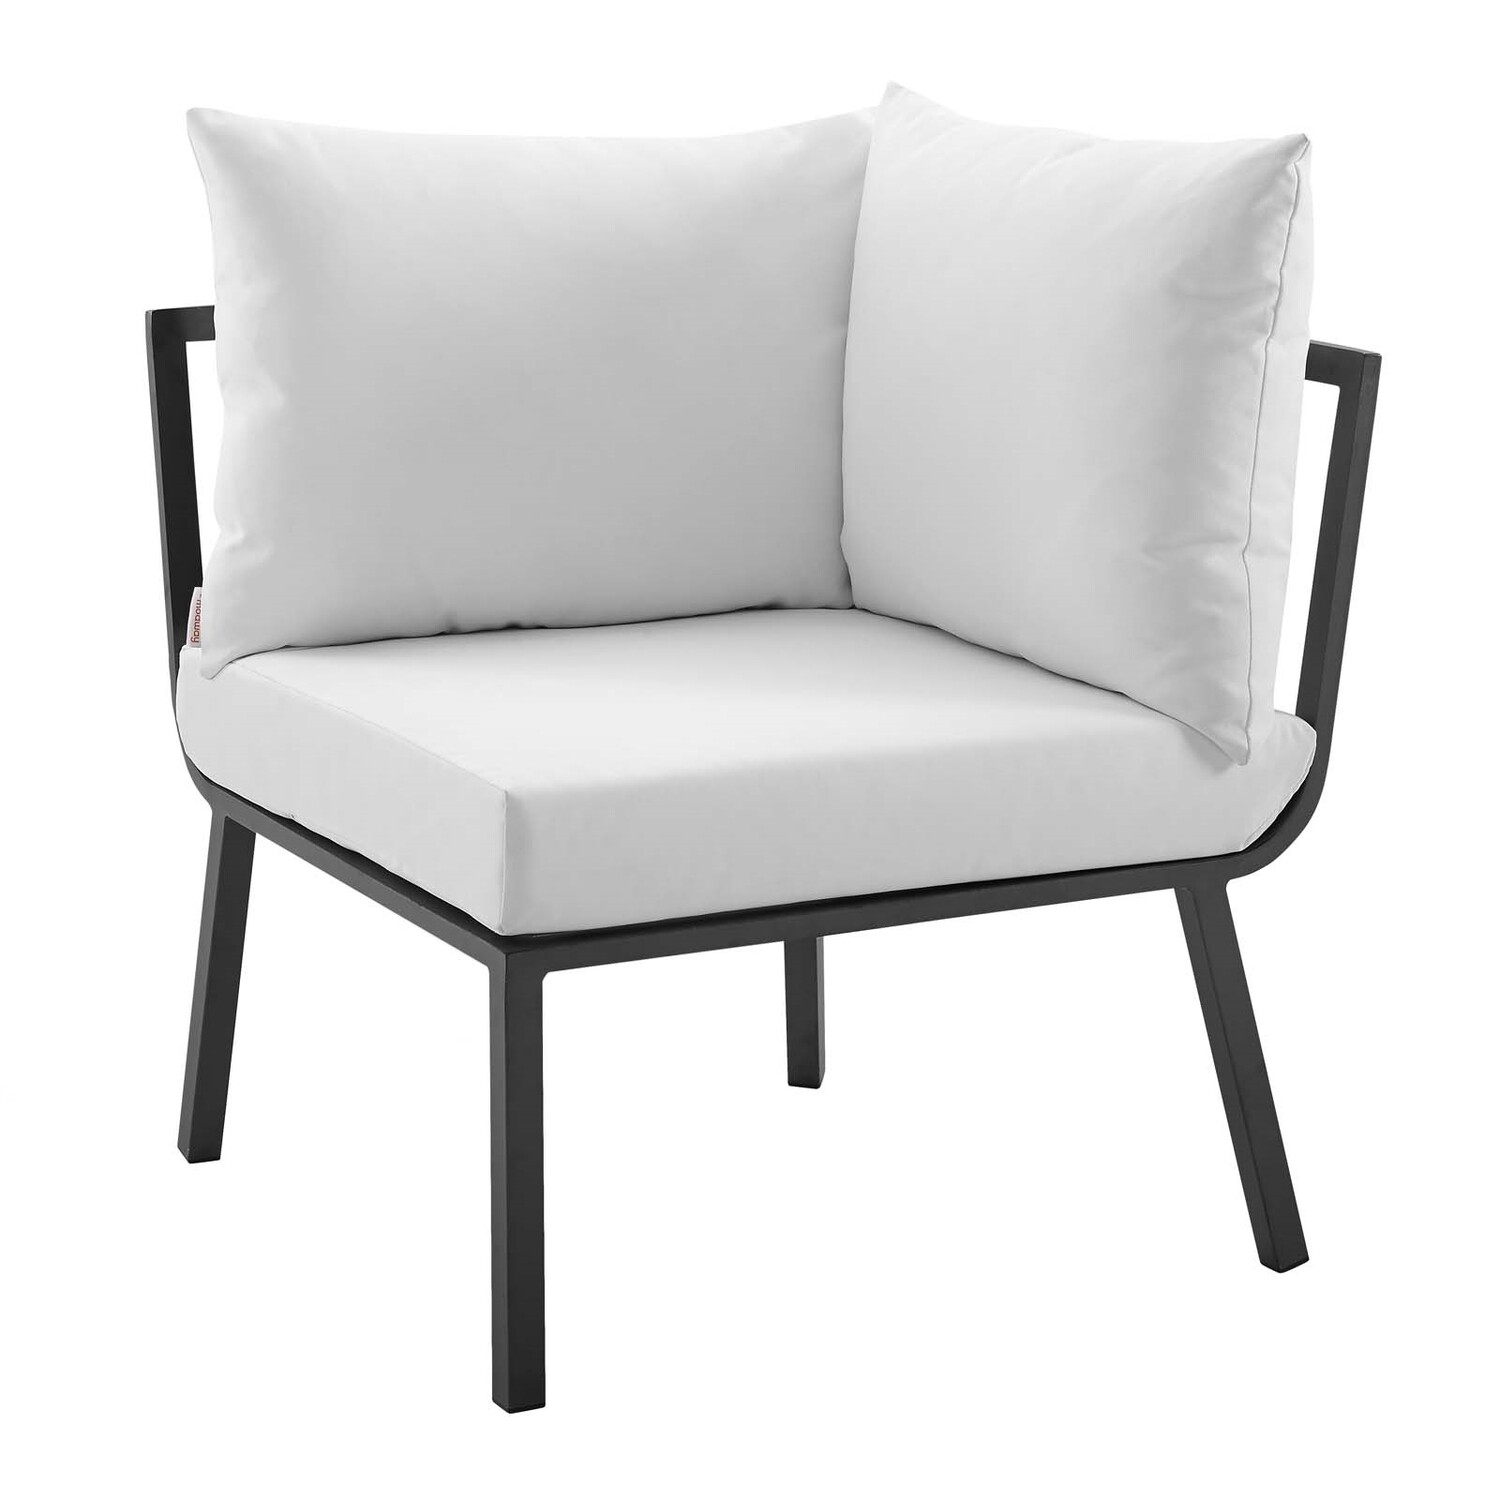 River North Patio Sectional Sofa Corner Chair | Slate Aluminum Frame